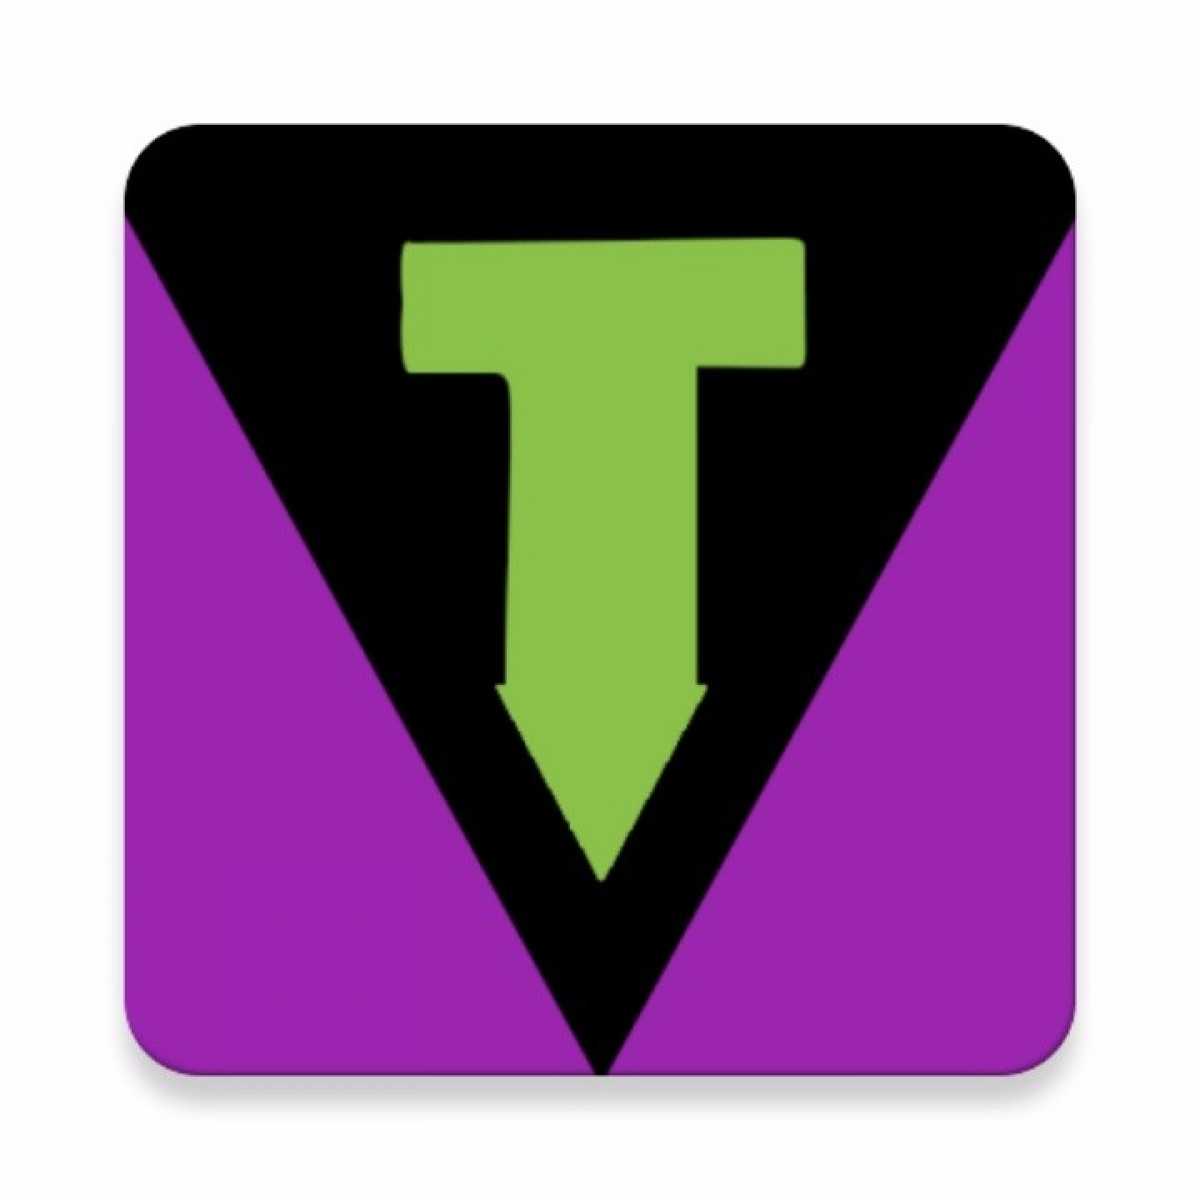 TorrentVilla v3.04.1 (Mod) Apk